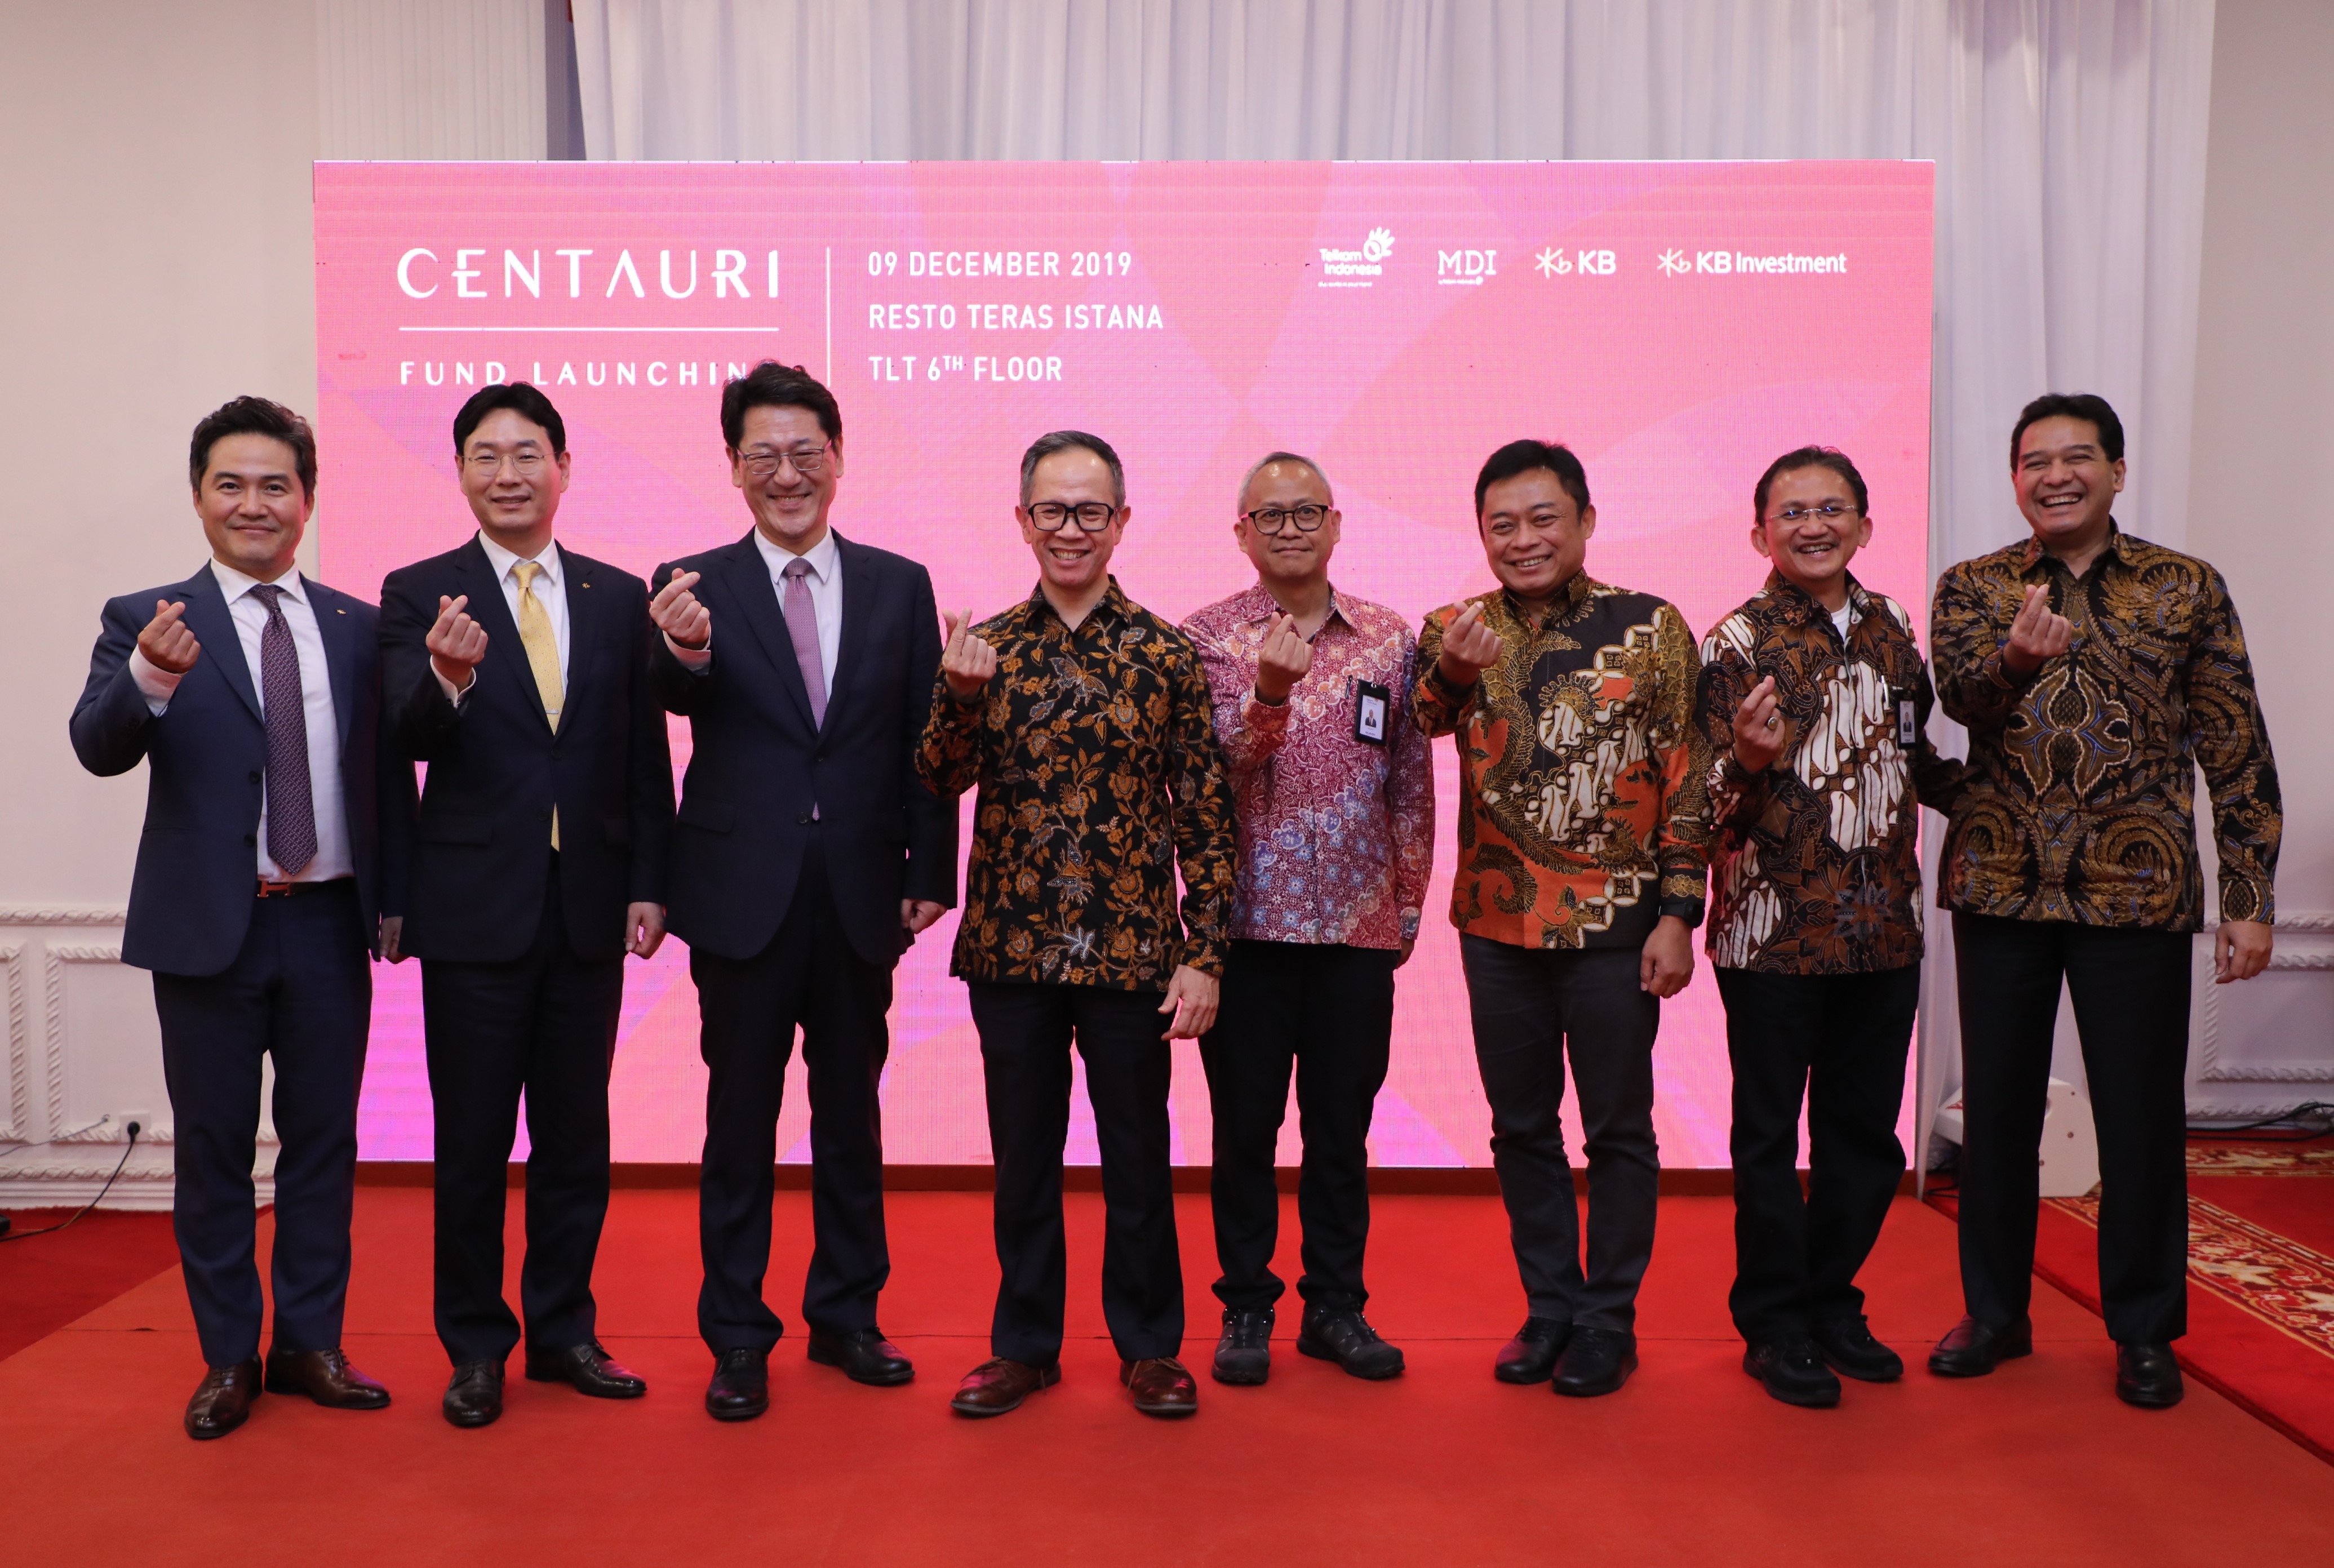 Indonesia’s Telkom CVC and KB Investment launch Centauri Fund